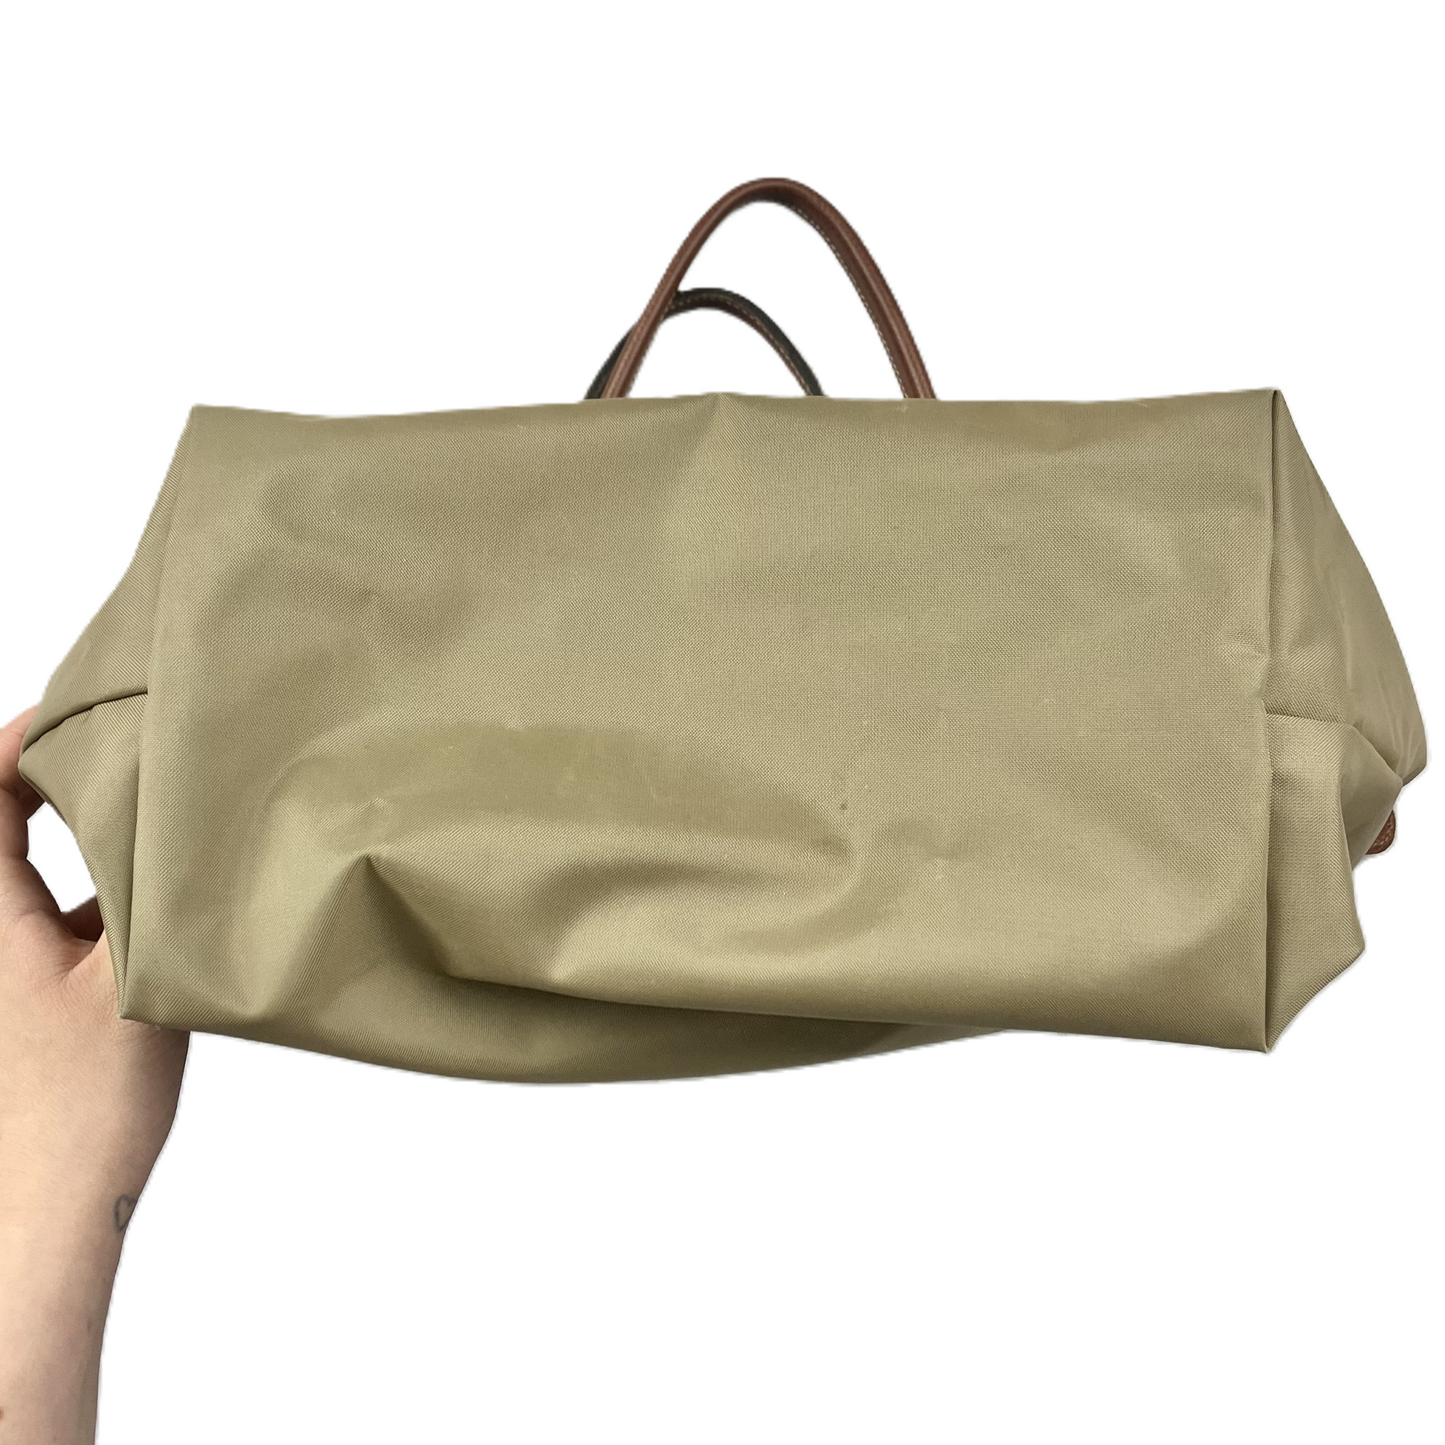 Handbag Designer By Longchamp, Size: Medium